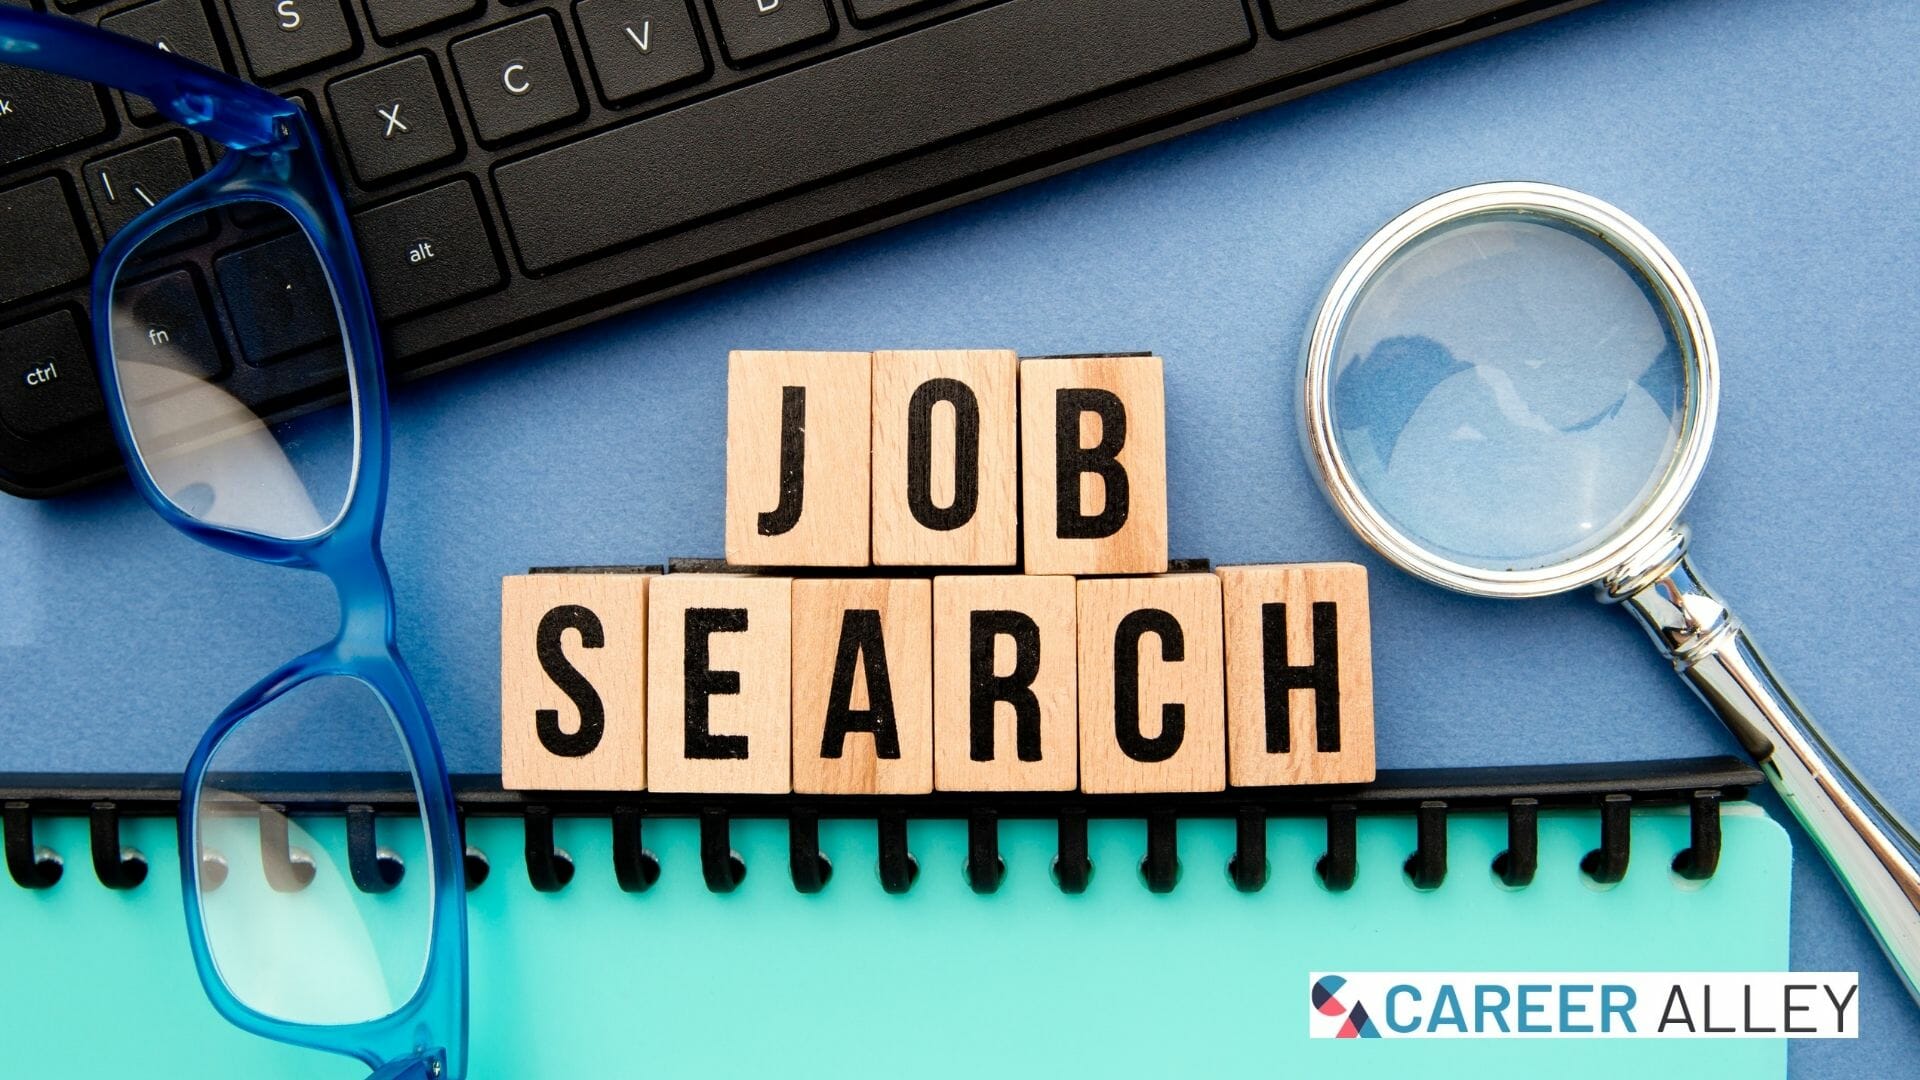 job search online